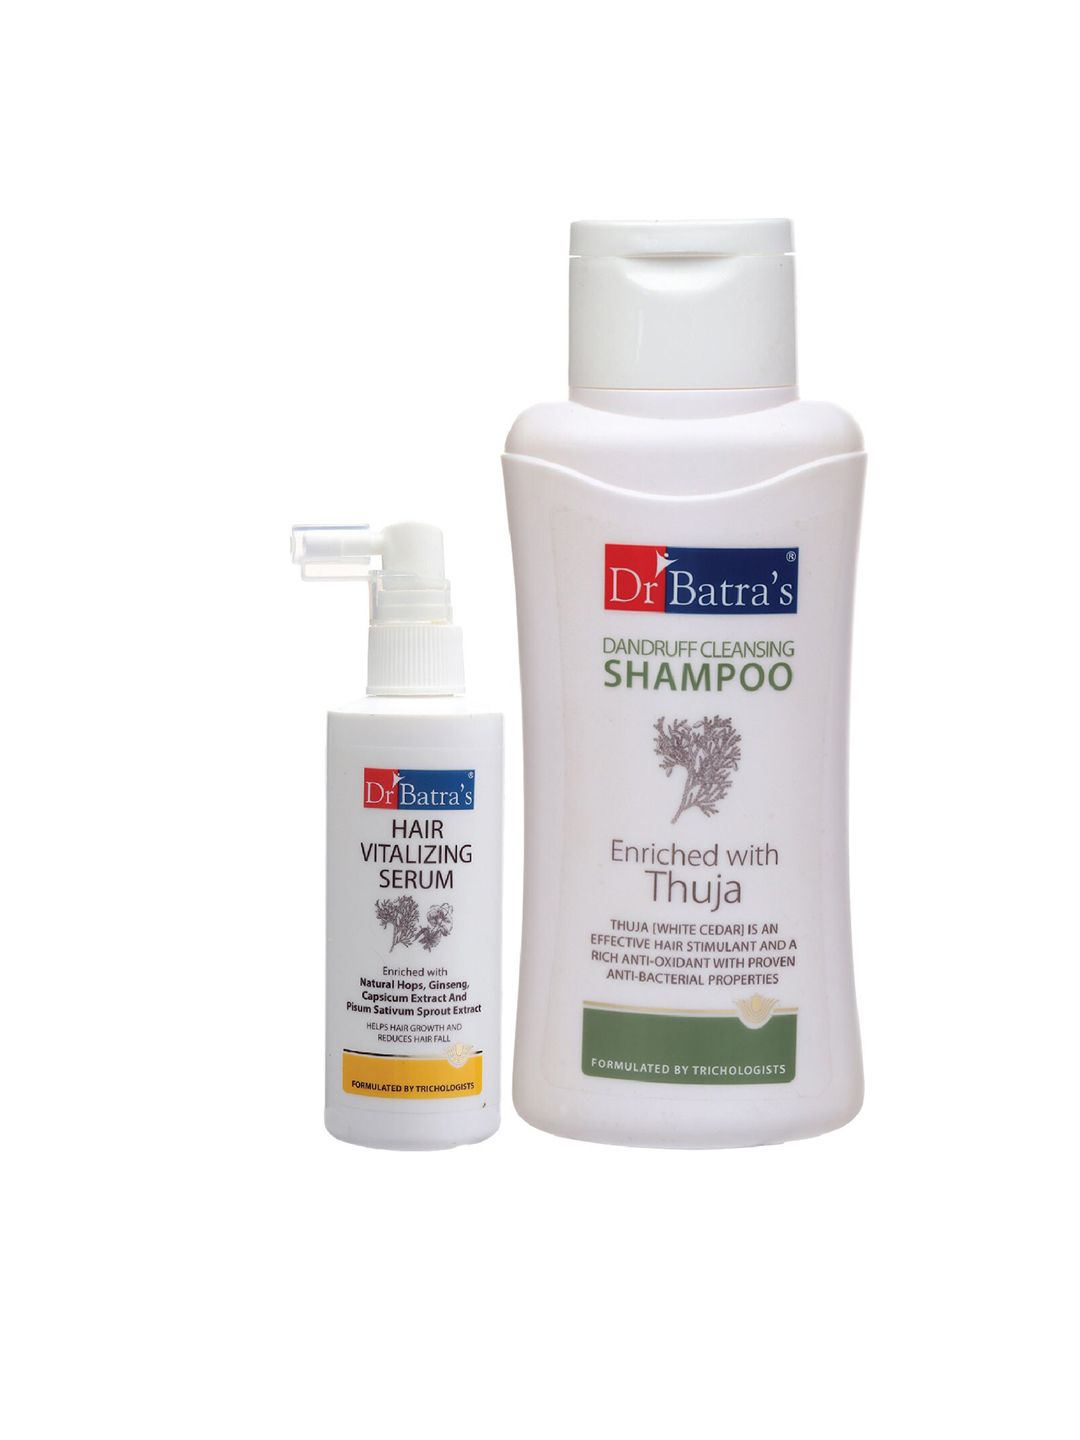 Dr. Batras Unisex Hair Vitalizing Serum 125 ml & Dandruff Cleansing Shampoo 500 ml Price in India